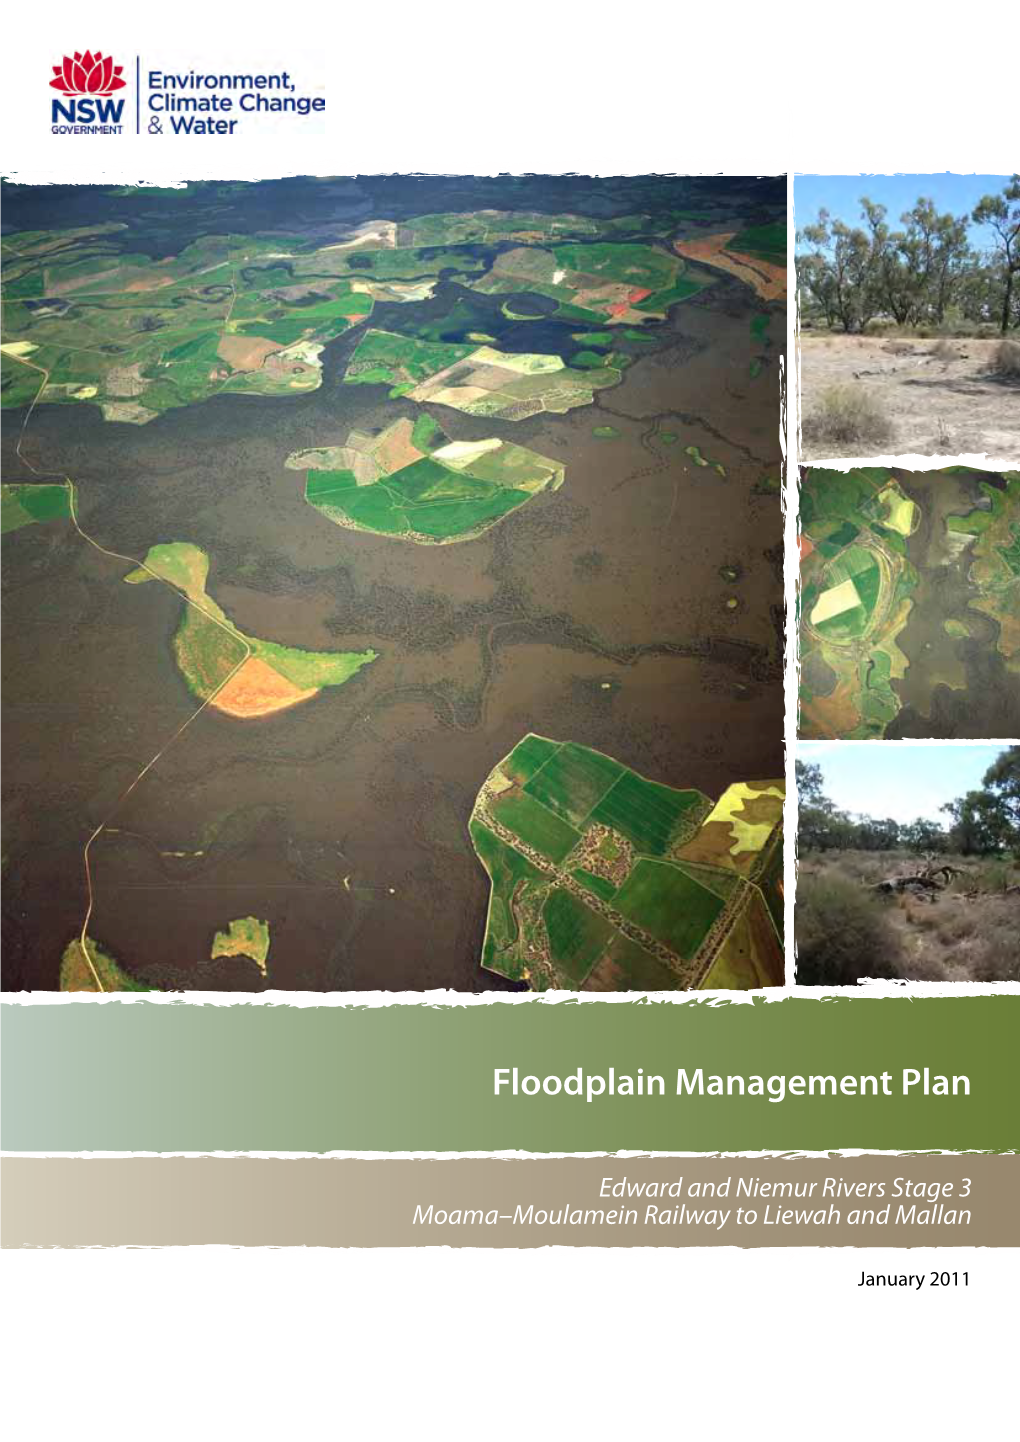 Edward and Niemur Rivers Stage 3 Floodplain Management Plan